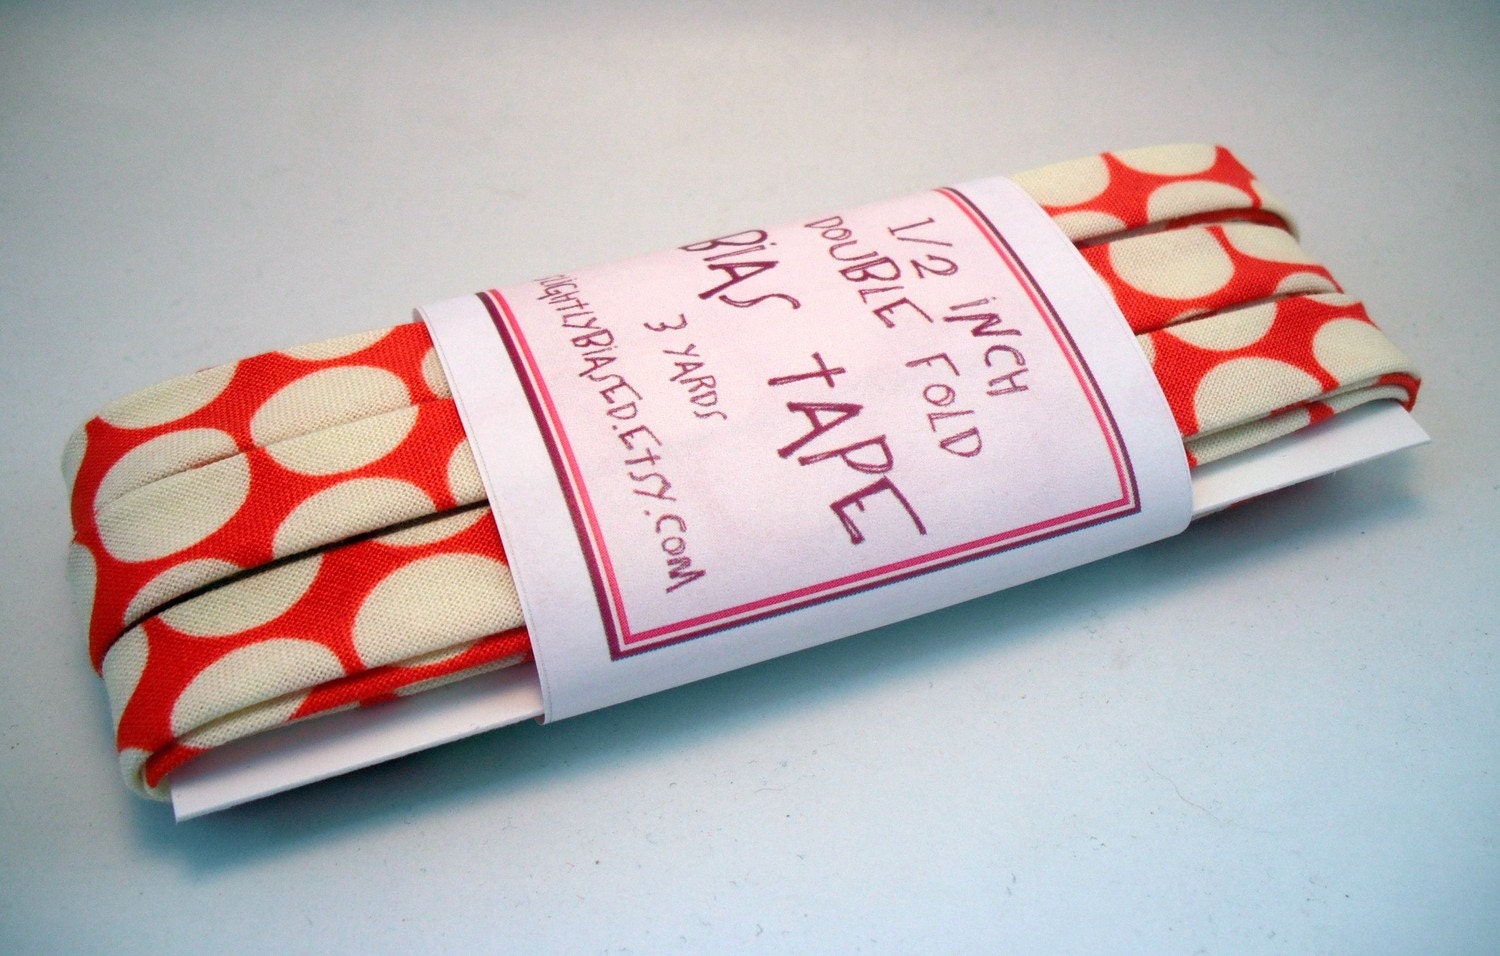 Bias Tape - Full Moon Polka Dot in Cherry Handmade Double Fold Bias Tape, 3 Yards